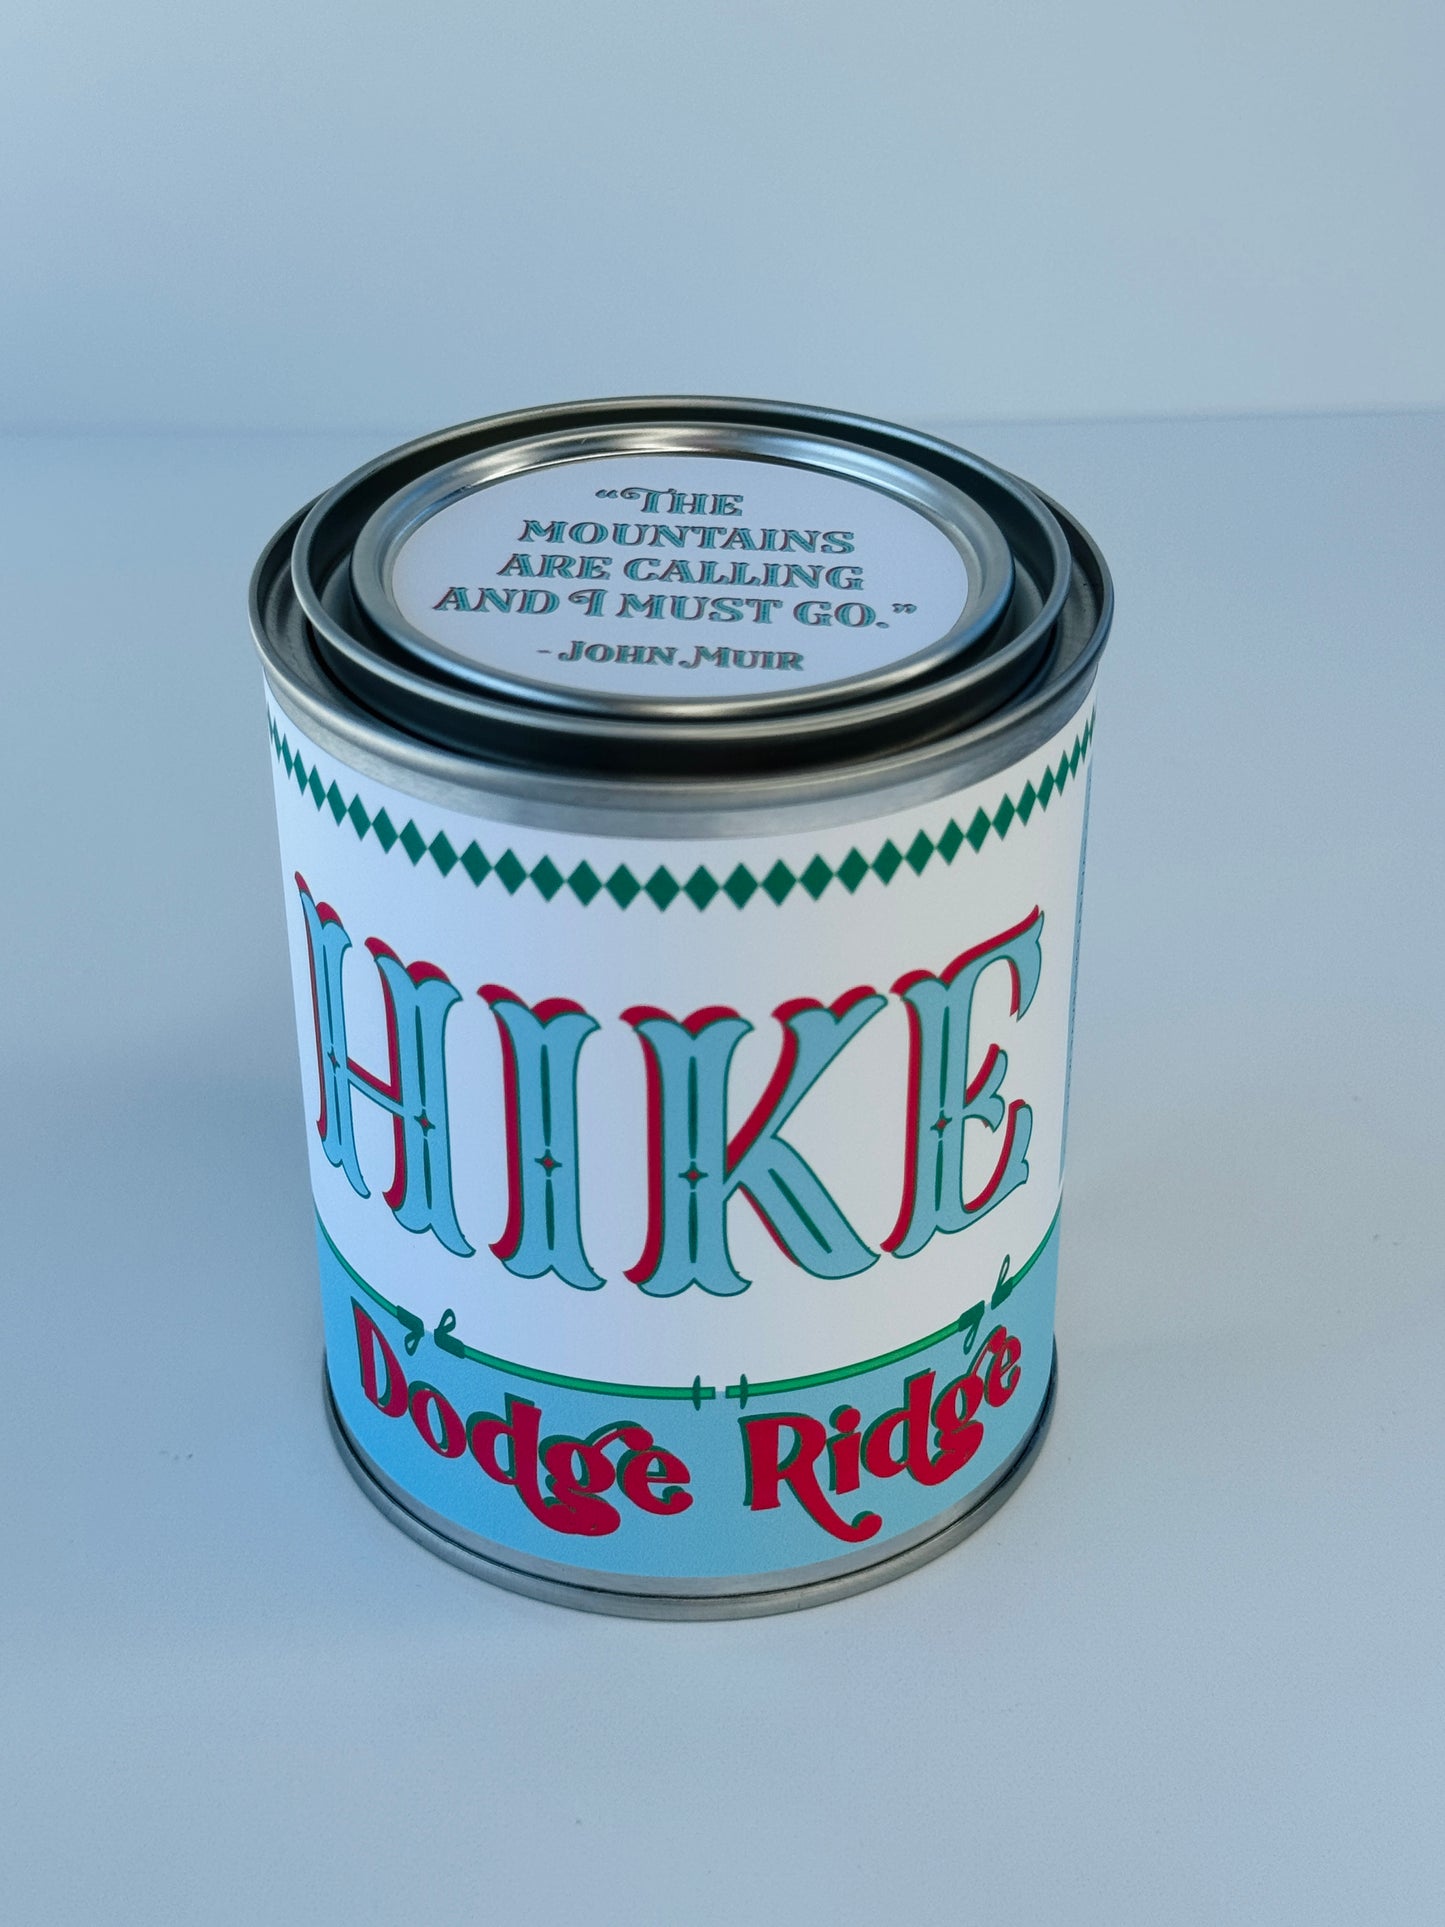 Hike Dodge Ridge - Paint Tin Candle